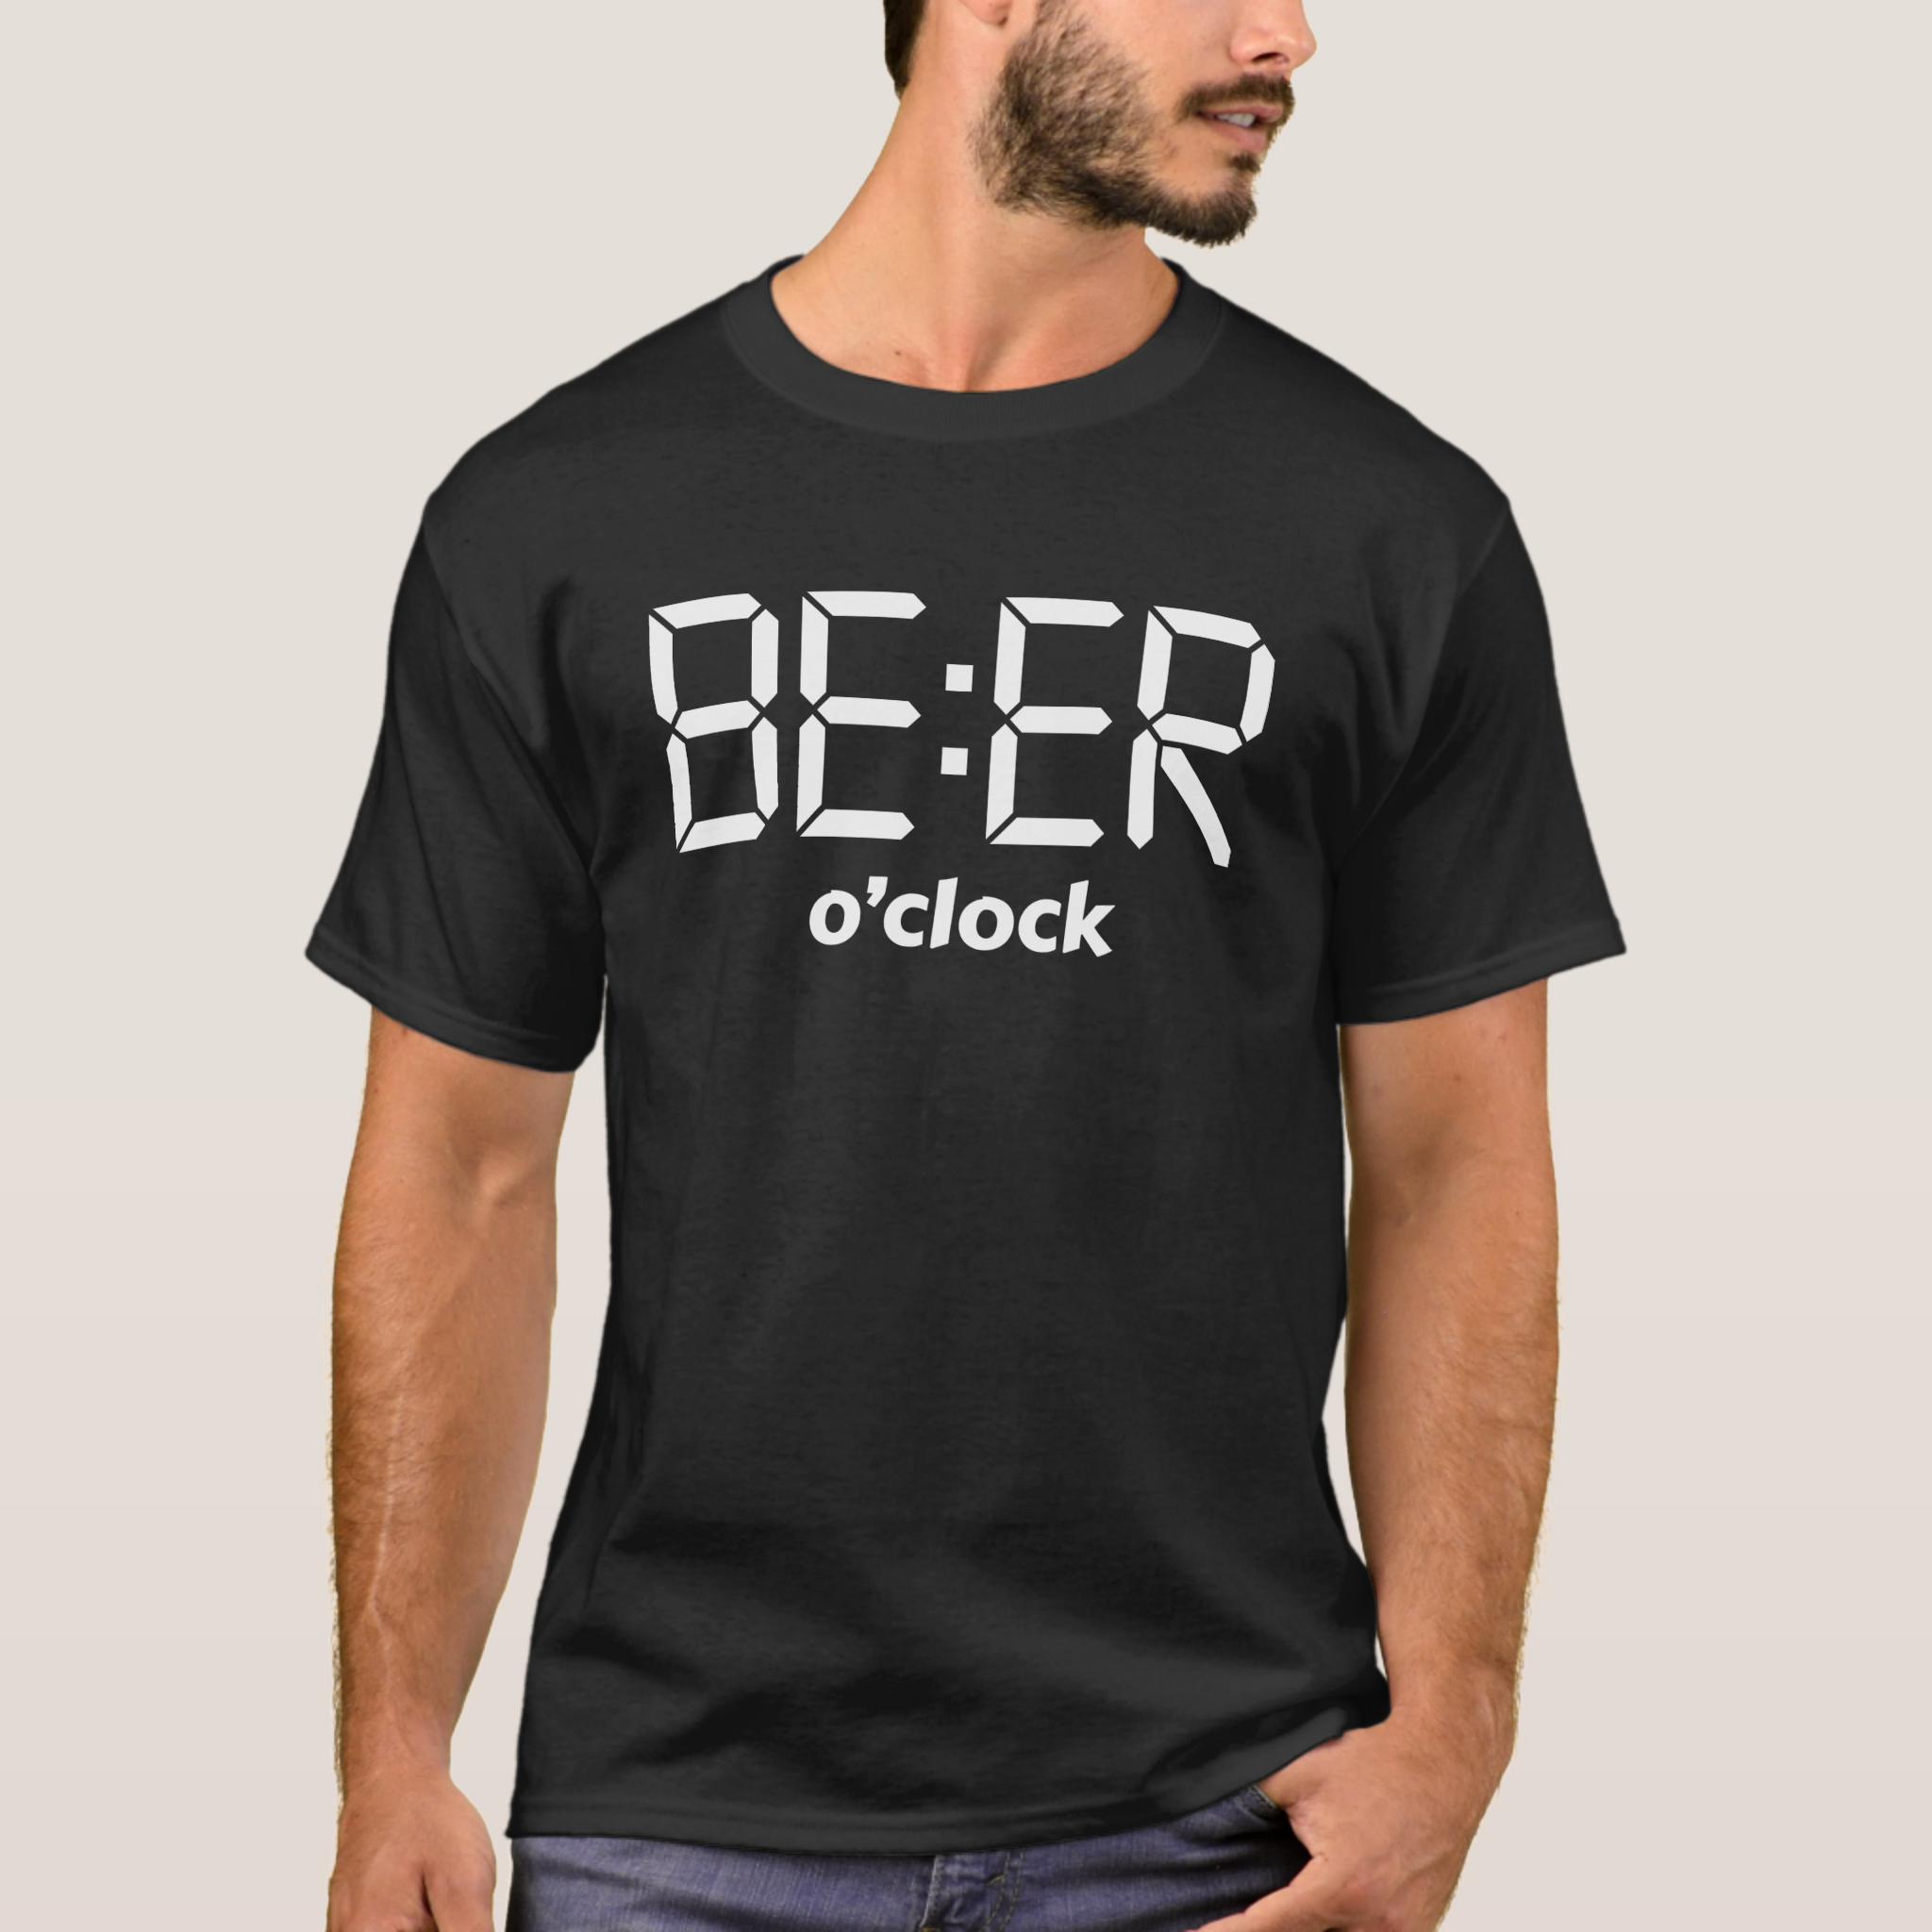 Футболка "Beer o'clock"